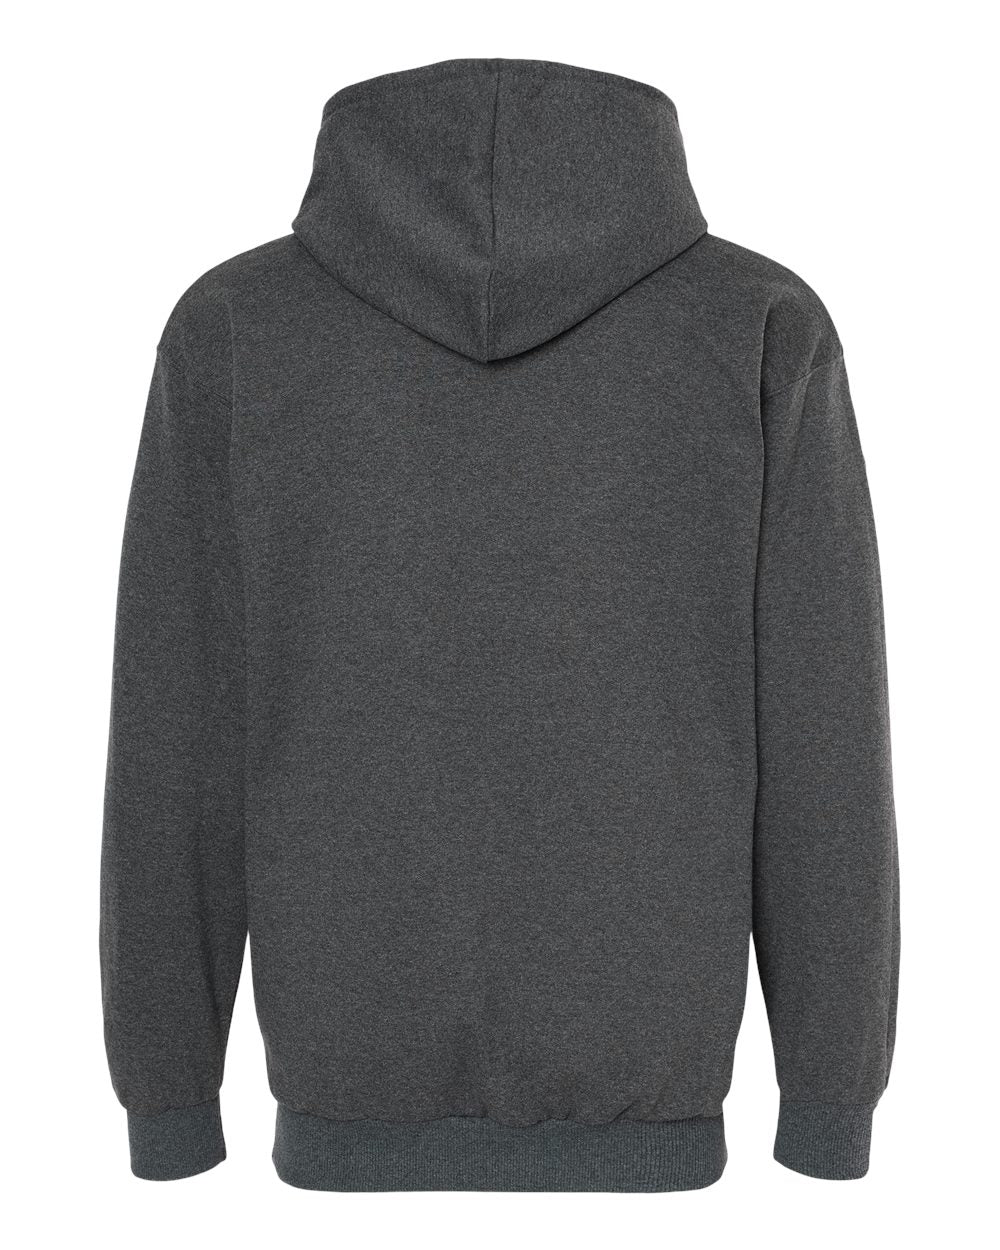 King Fashion Two-Tone Hooded Sweatshirt KF9041 #color_Charcoal/ Black